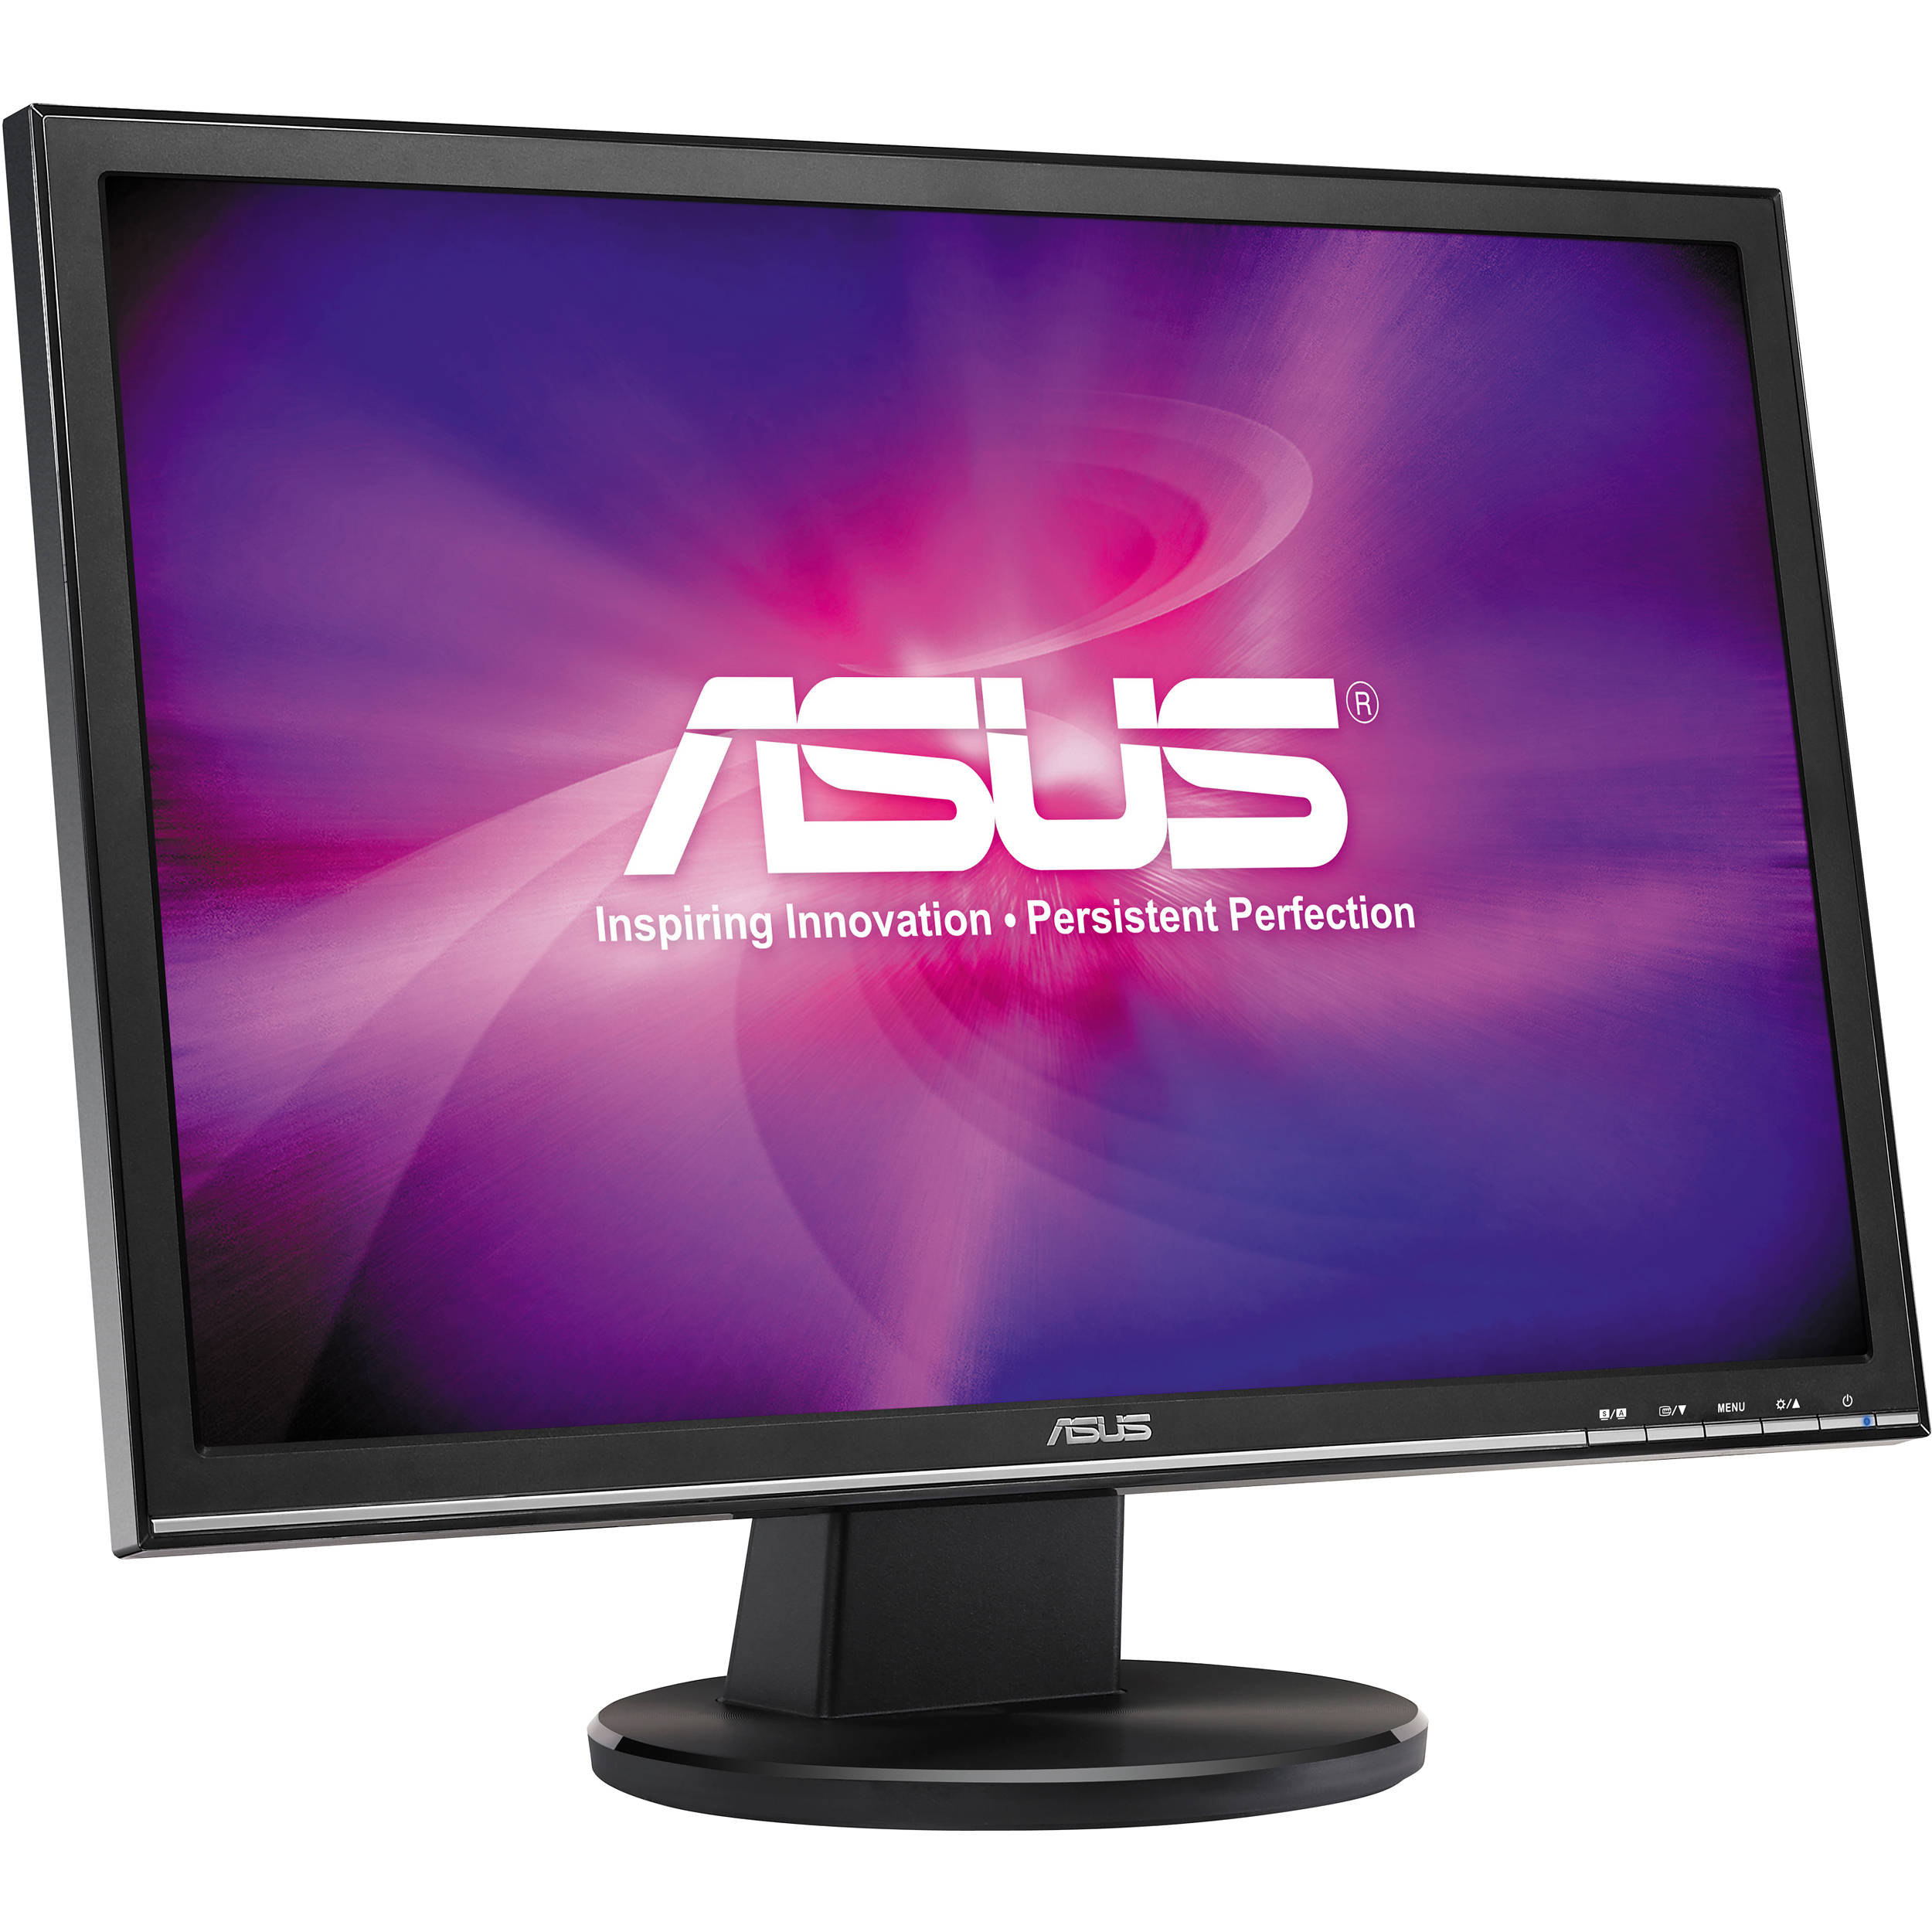 Asus Vw22at Csm 22 Widescreen Led Backlit Lcd Monitor